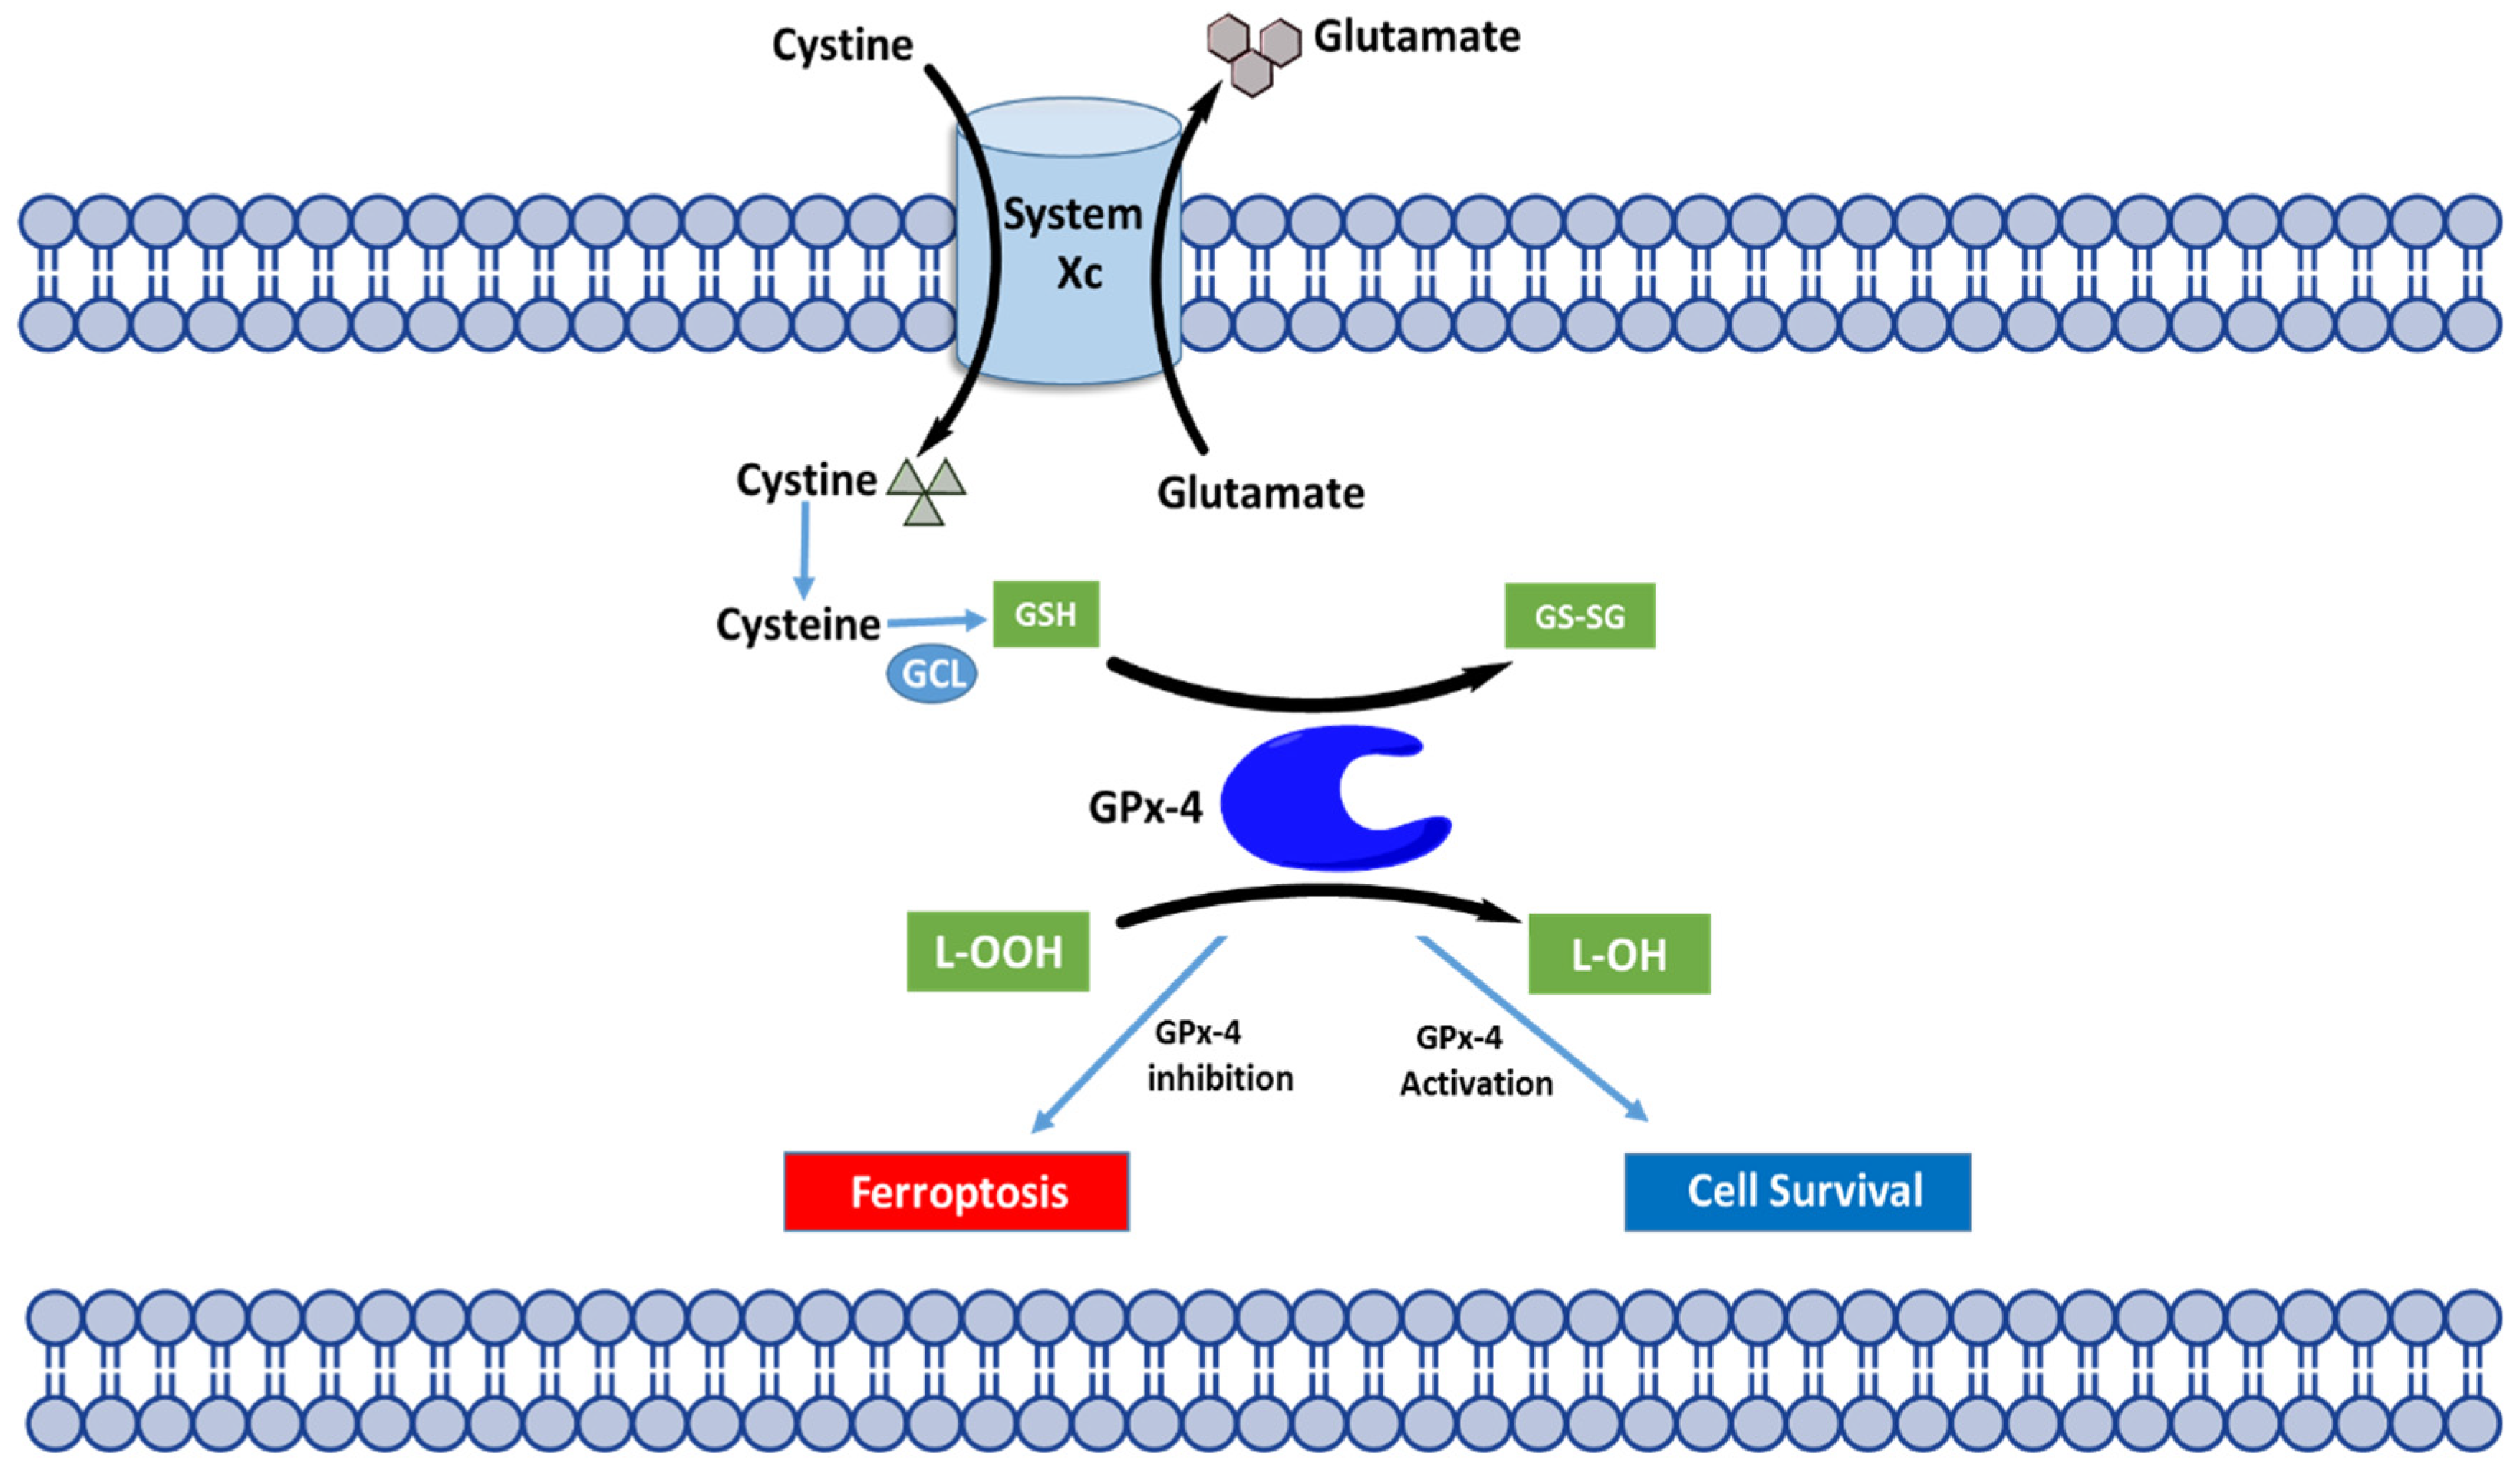 glutathione peroxidase structure